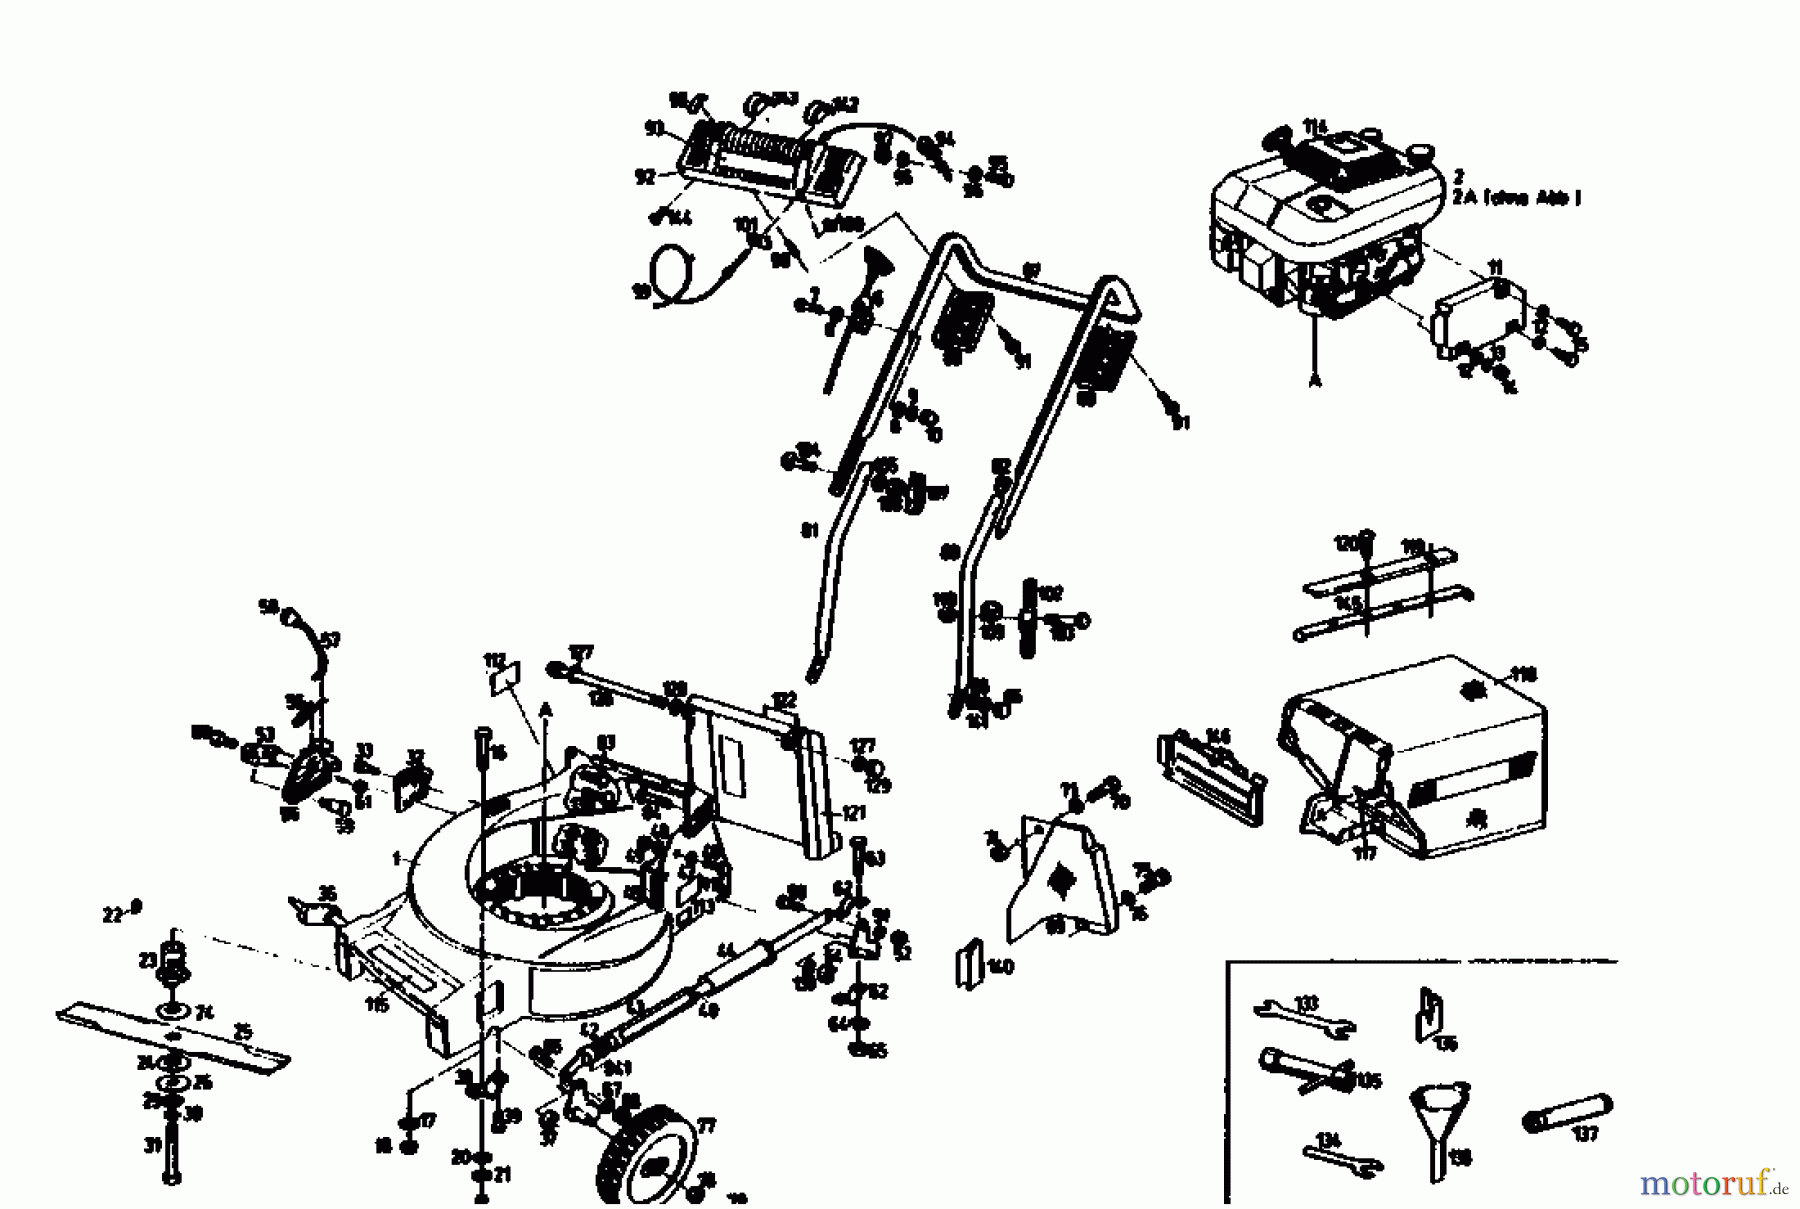  Gutbrod Petrol mower MH 534 04005.02  (1991) Basic machine